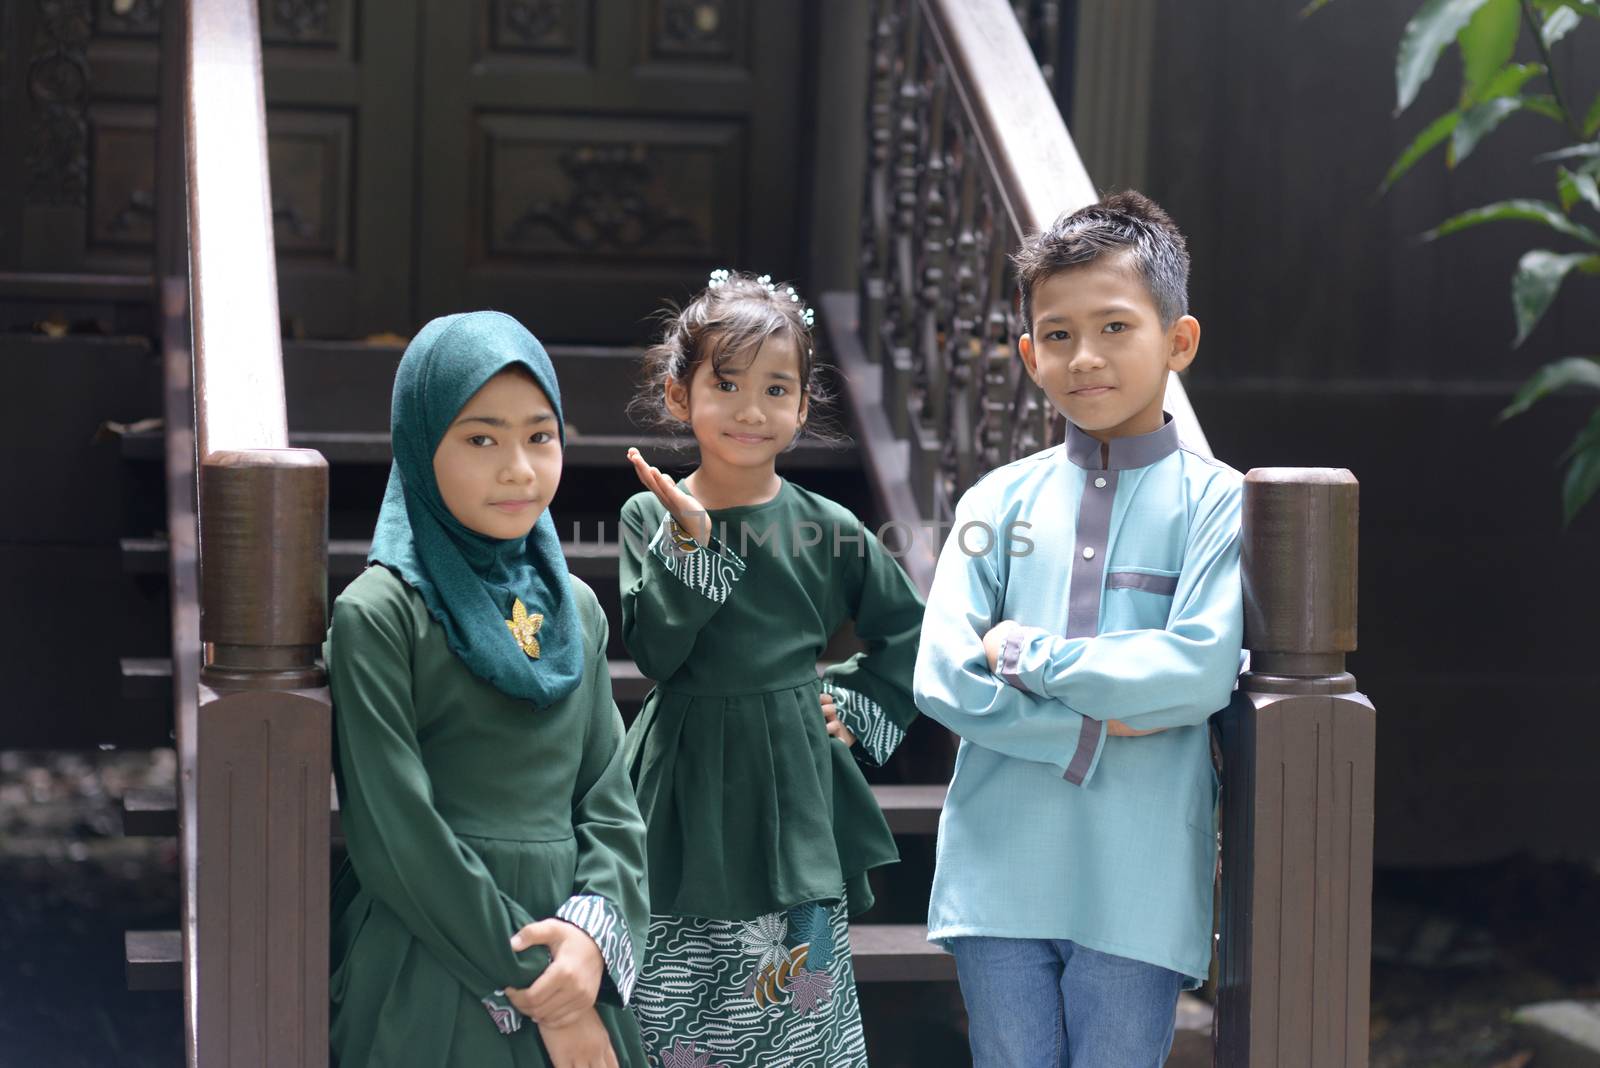 Muslim children portrait, Hari Raya Eid Al-Fitr concept. 